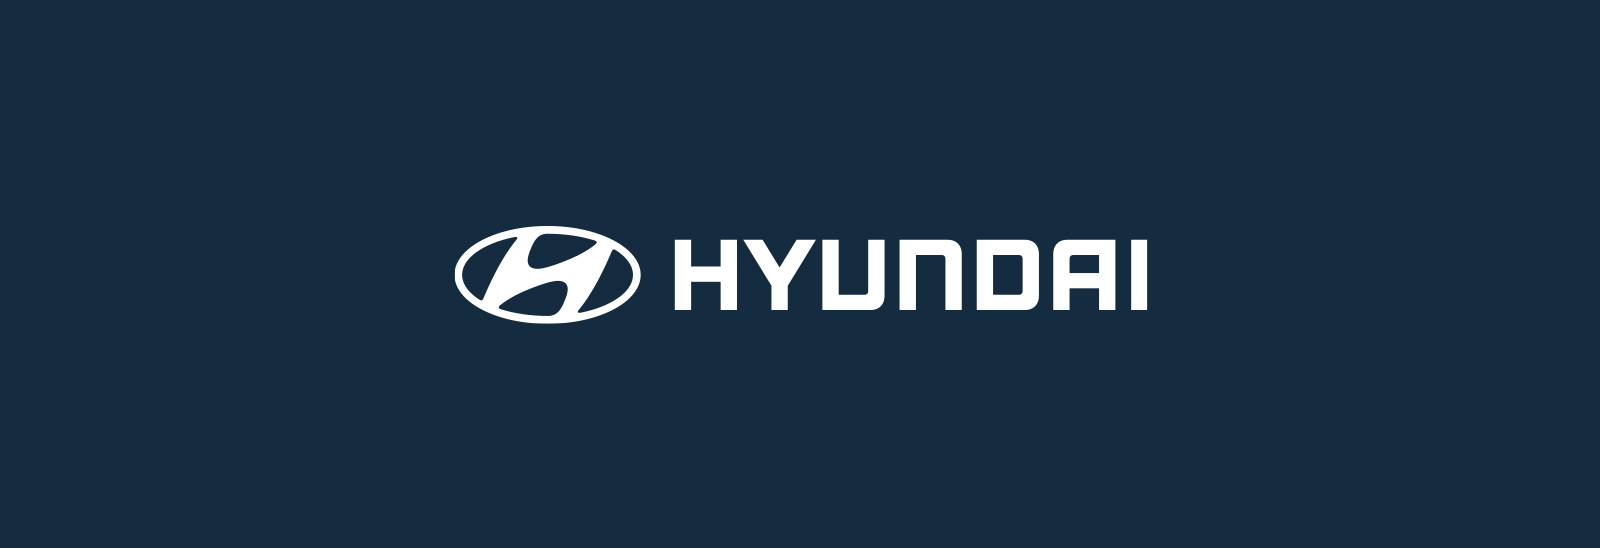 Logo Hyundai color blanco sobre fondo azul